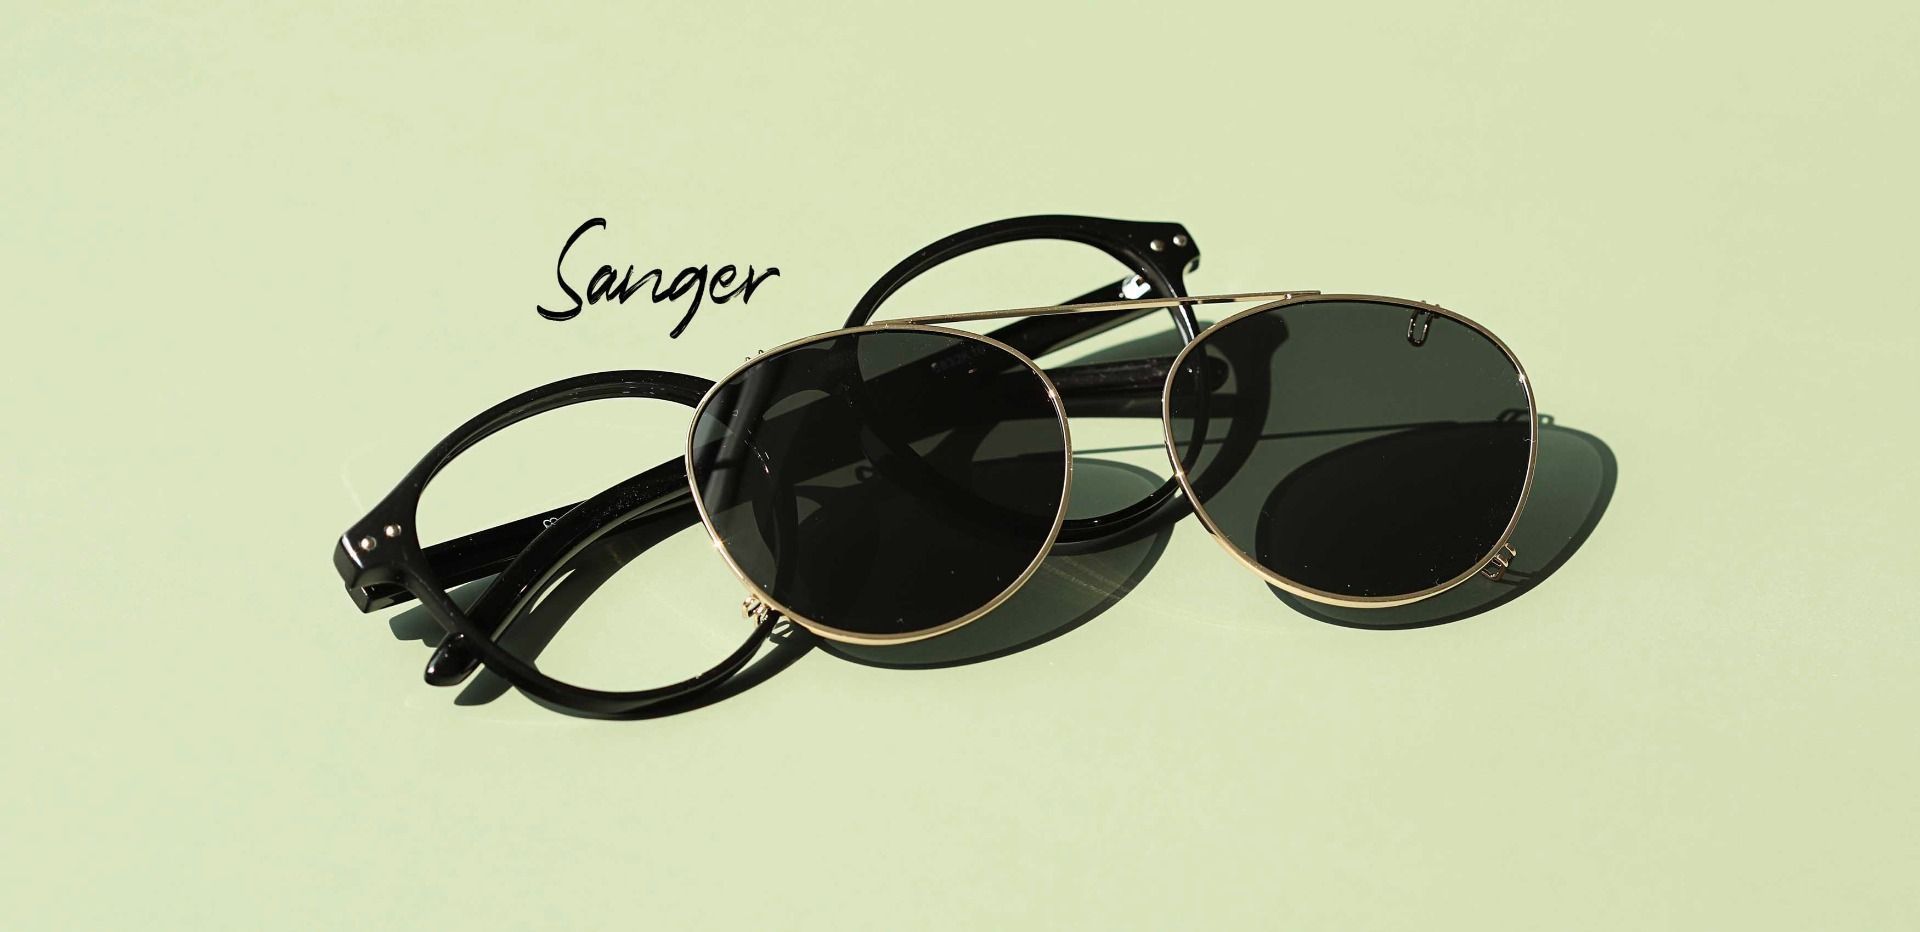 Sanger Round Prescription Glasses - Black